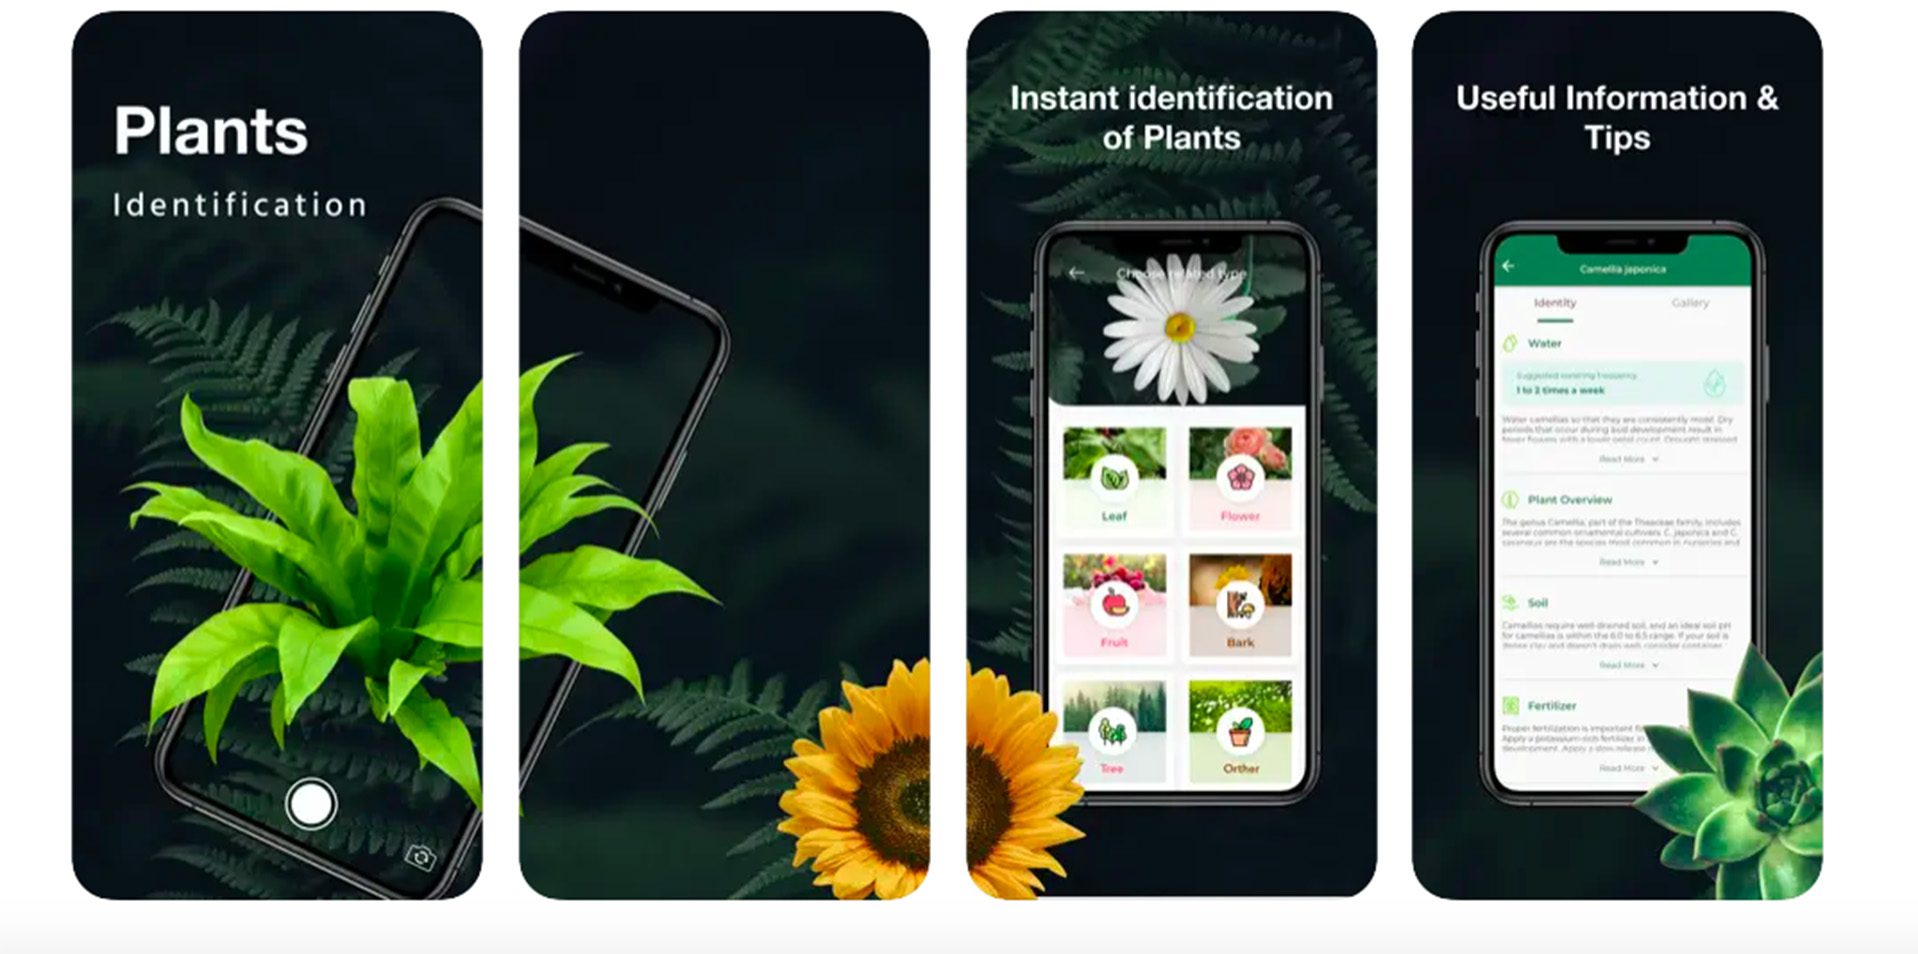 Leaf Snap Plant App Gardeners Identification